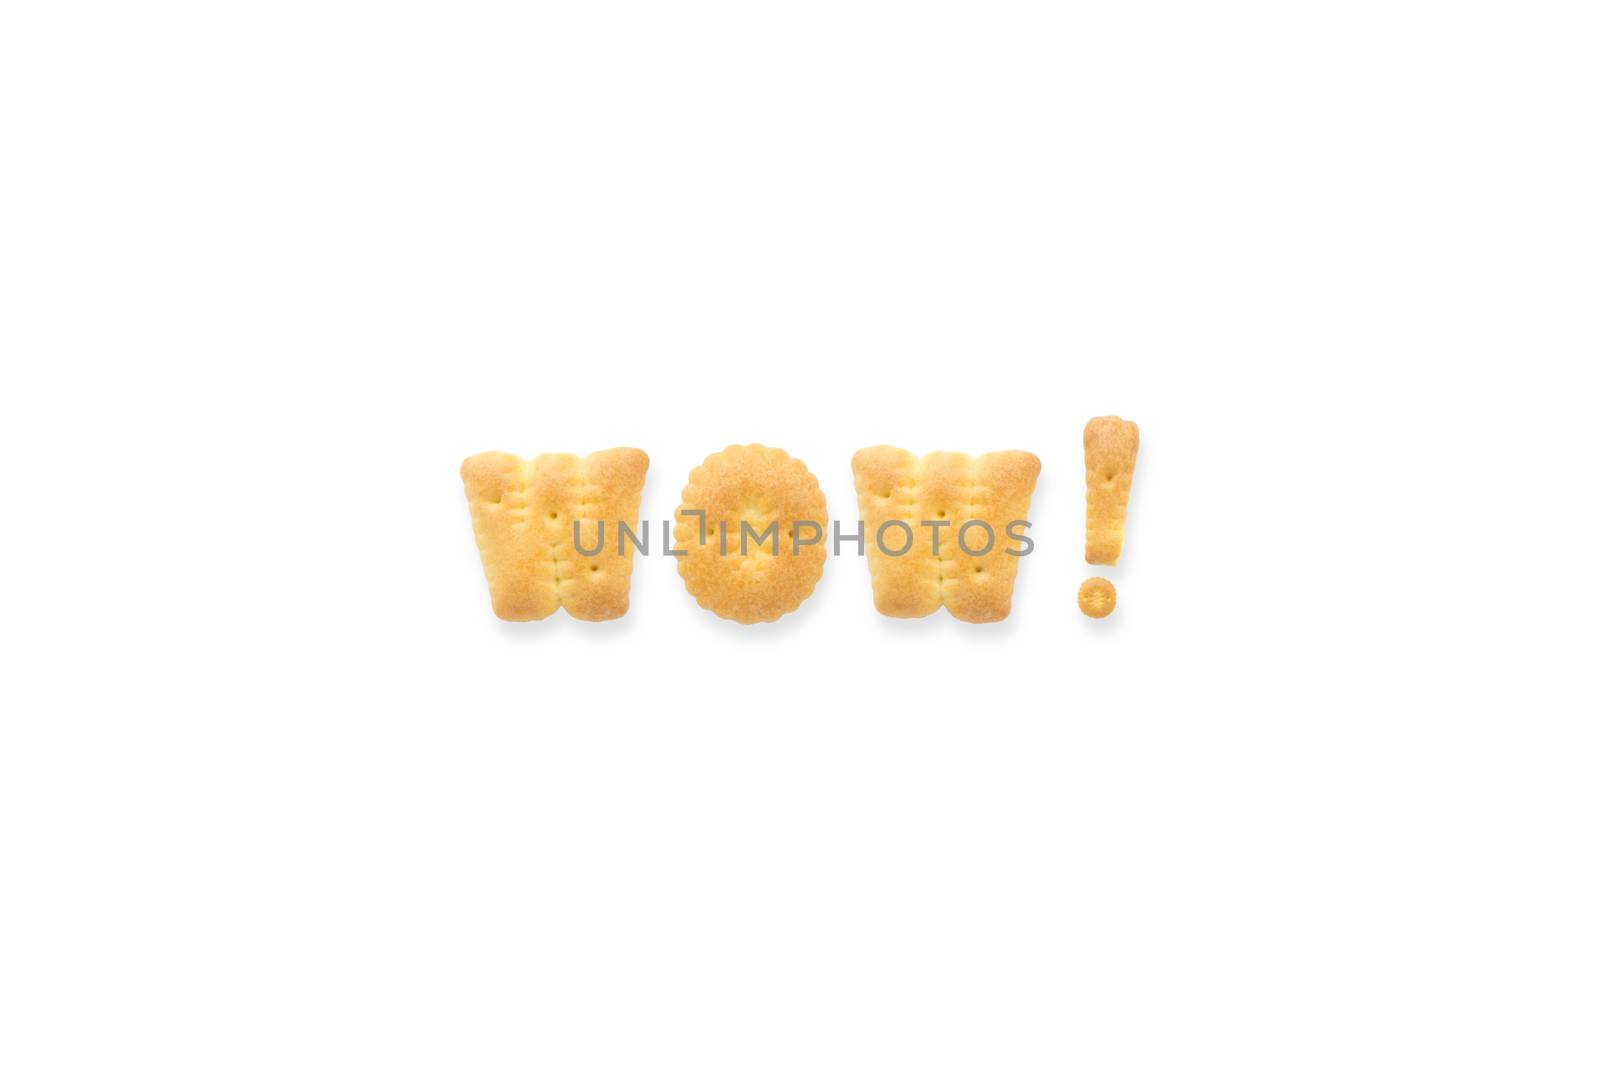 The Letter Word WOW Alphabet Biscuit Cracker by vinnstock